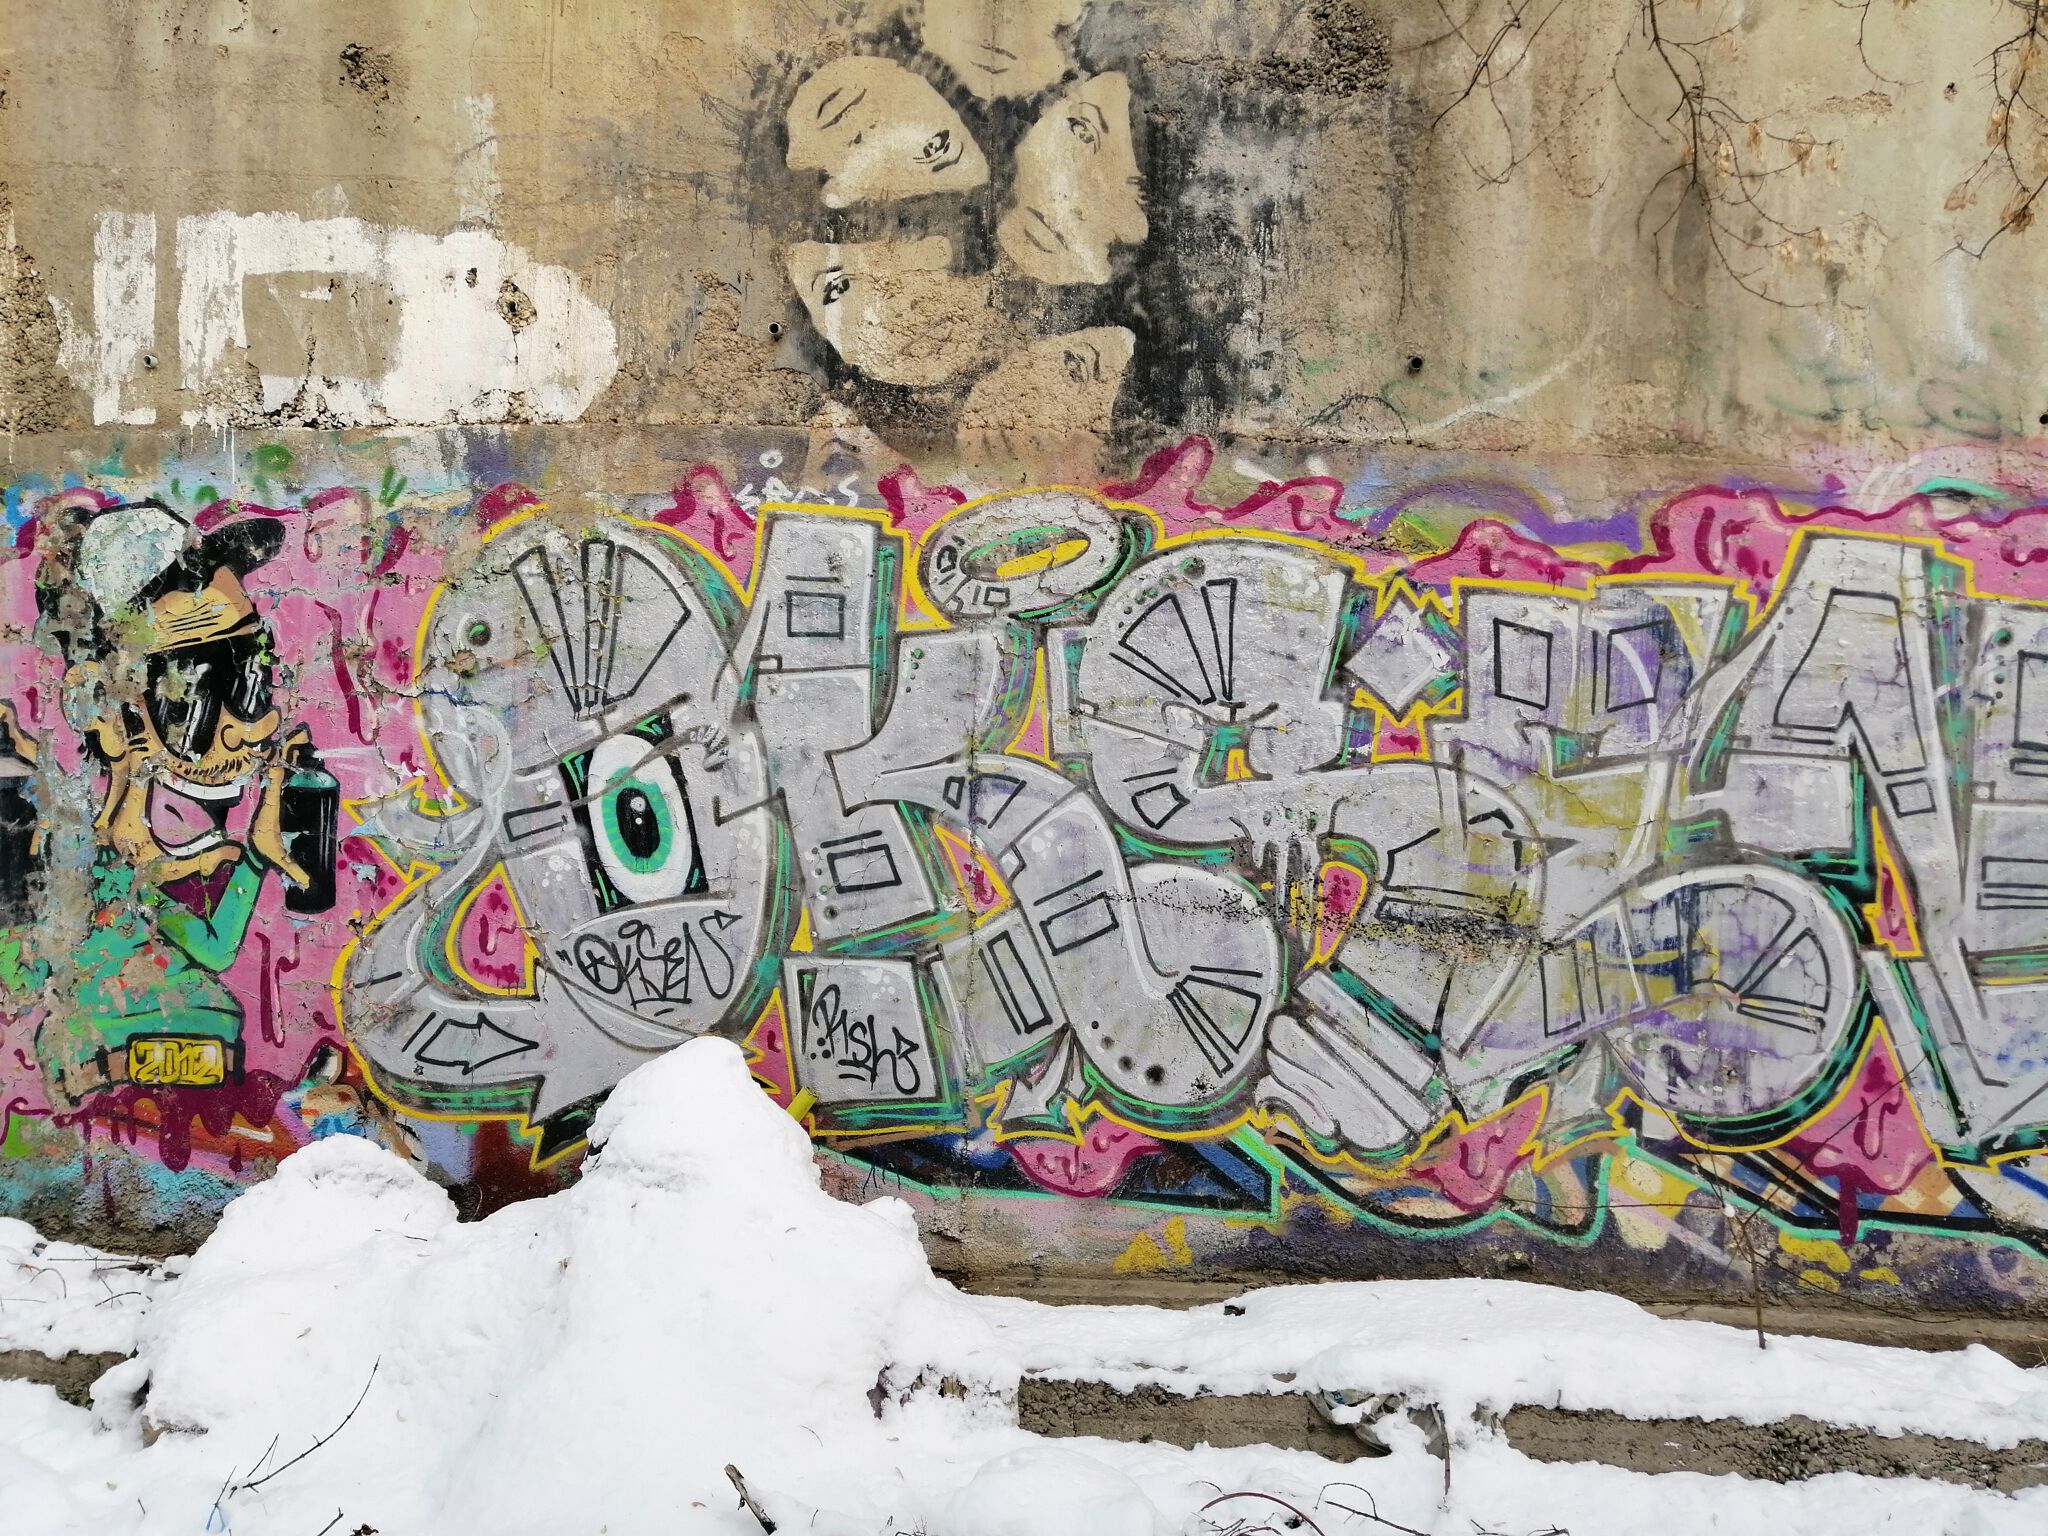 Senok, Nice, Abis, Taci, Blinky, Datok, Seer, Canos, Zeke, Cage, emsi, Boem, Mser, Tisko, Recis, Oksen, Bare, Kero, SERM, Ramos, Myst&mdash;Graffiti History Museum | Bucharest